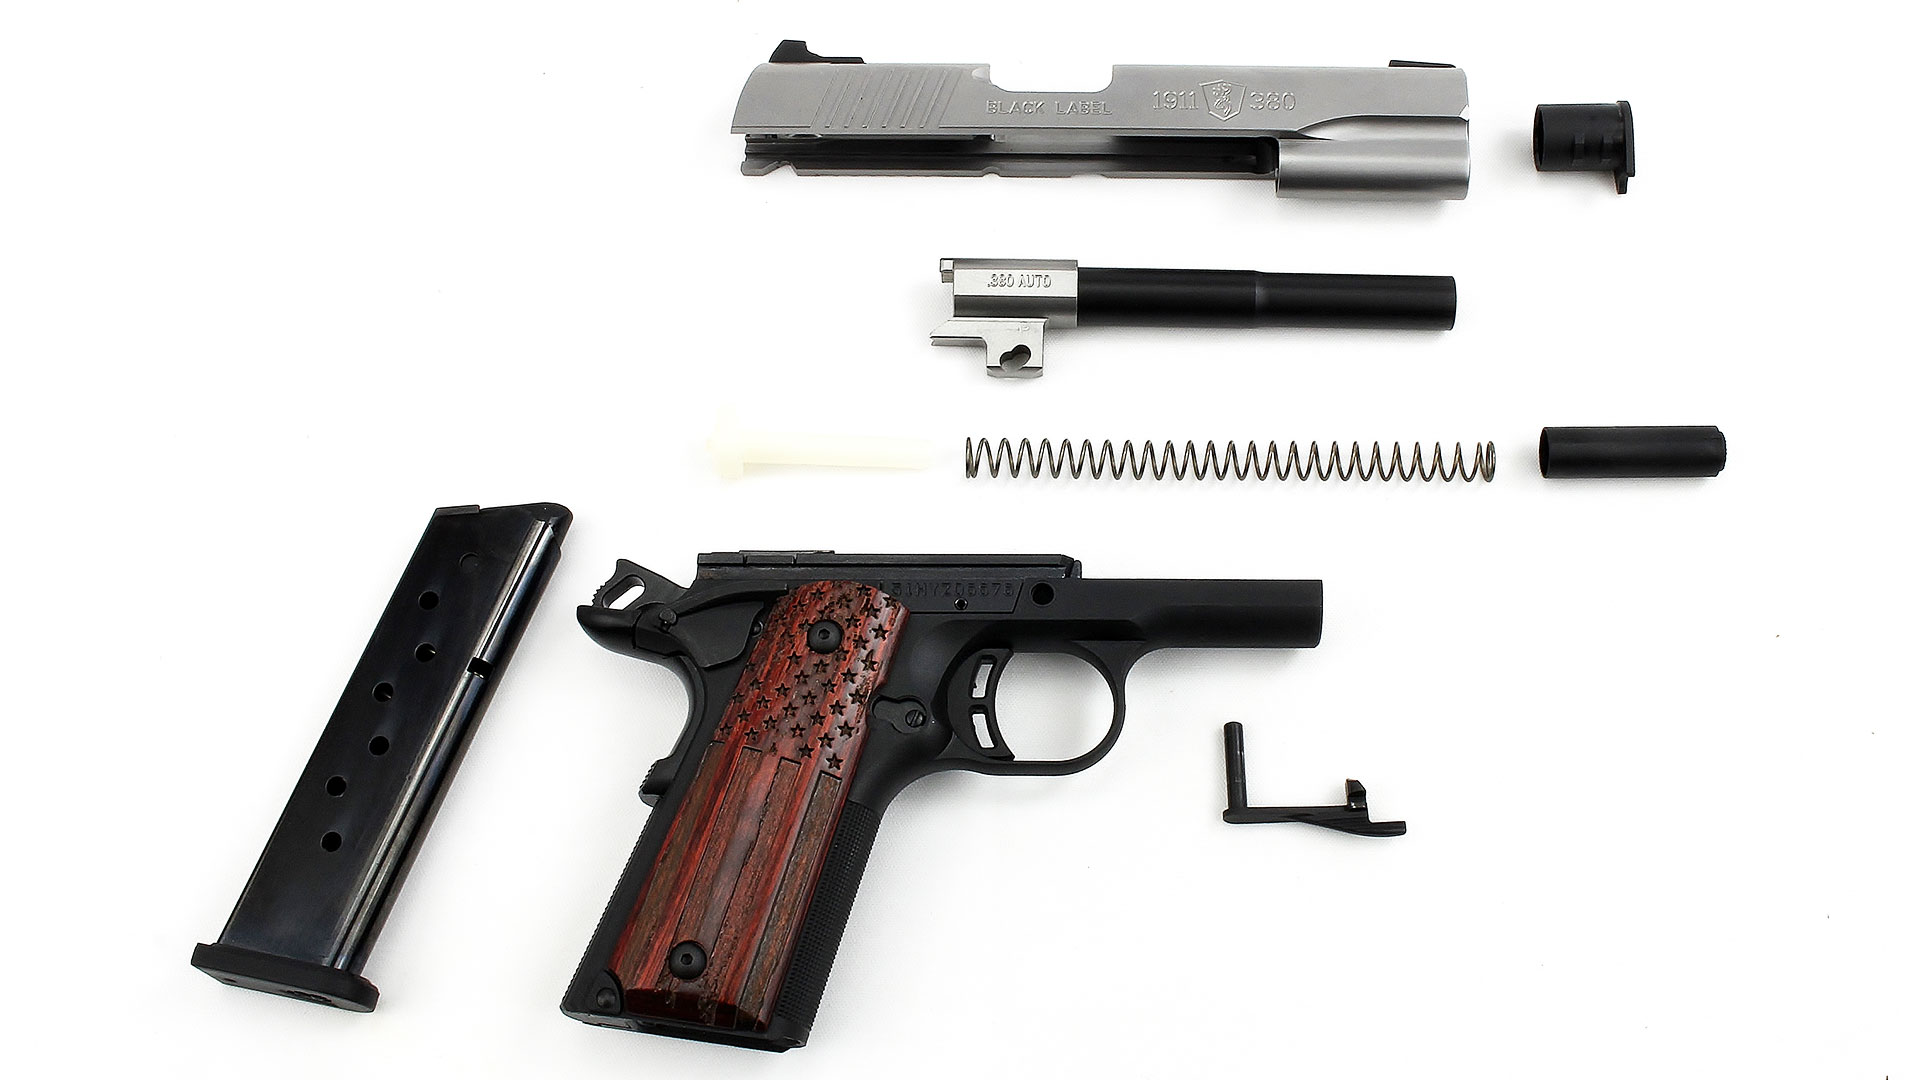 Browning Black Label 1911-380 Semi-Auto Pistol